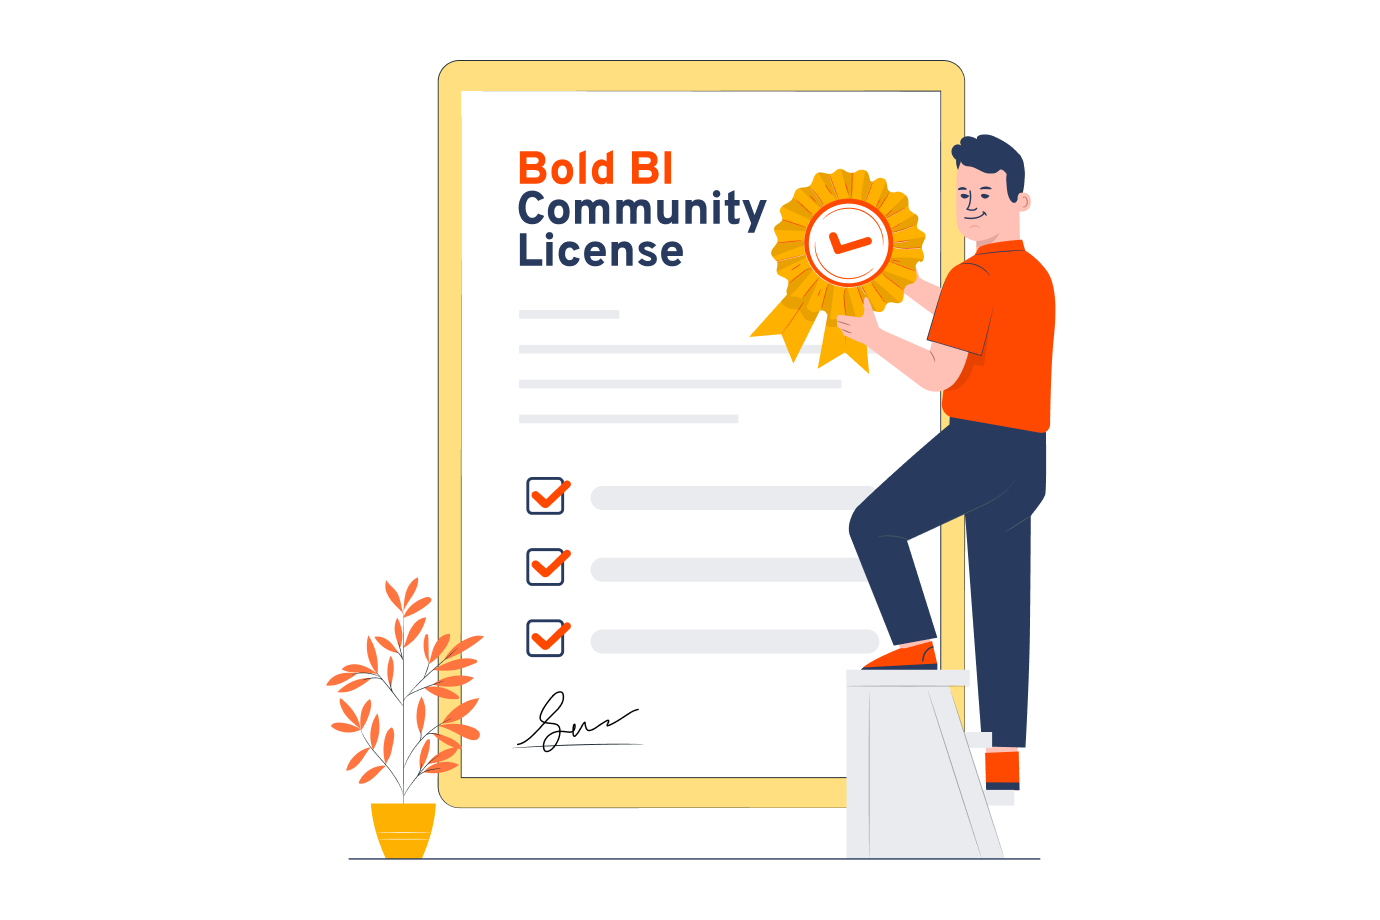 Bold BI Community What is Bold BI Community License